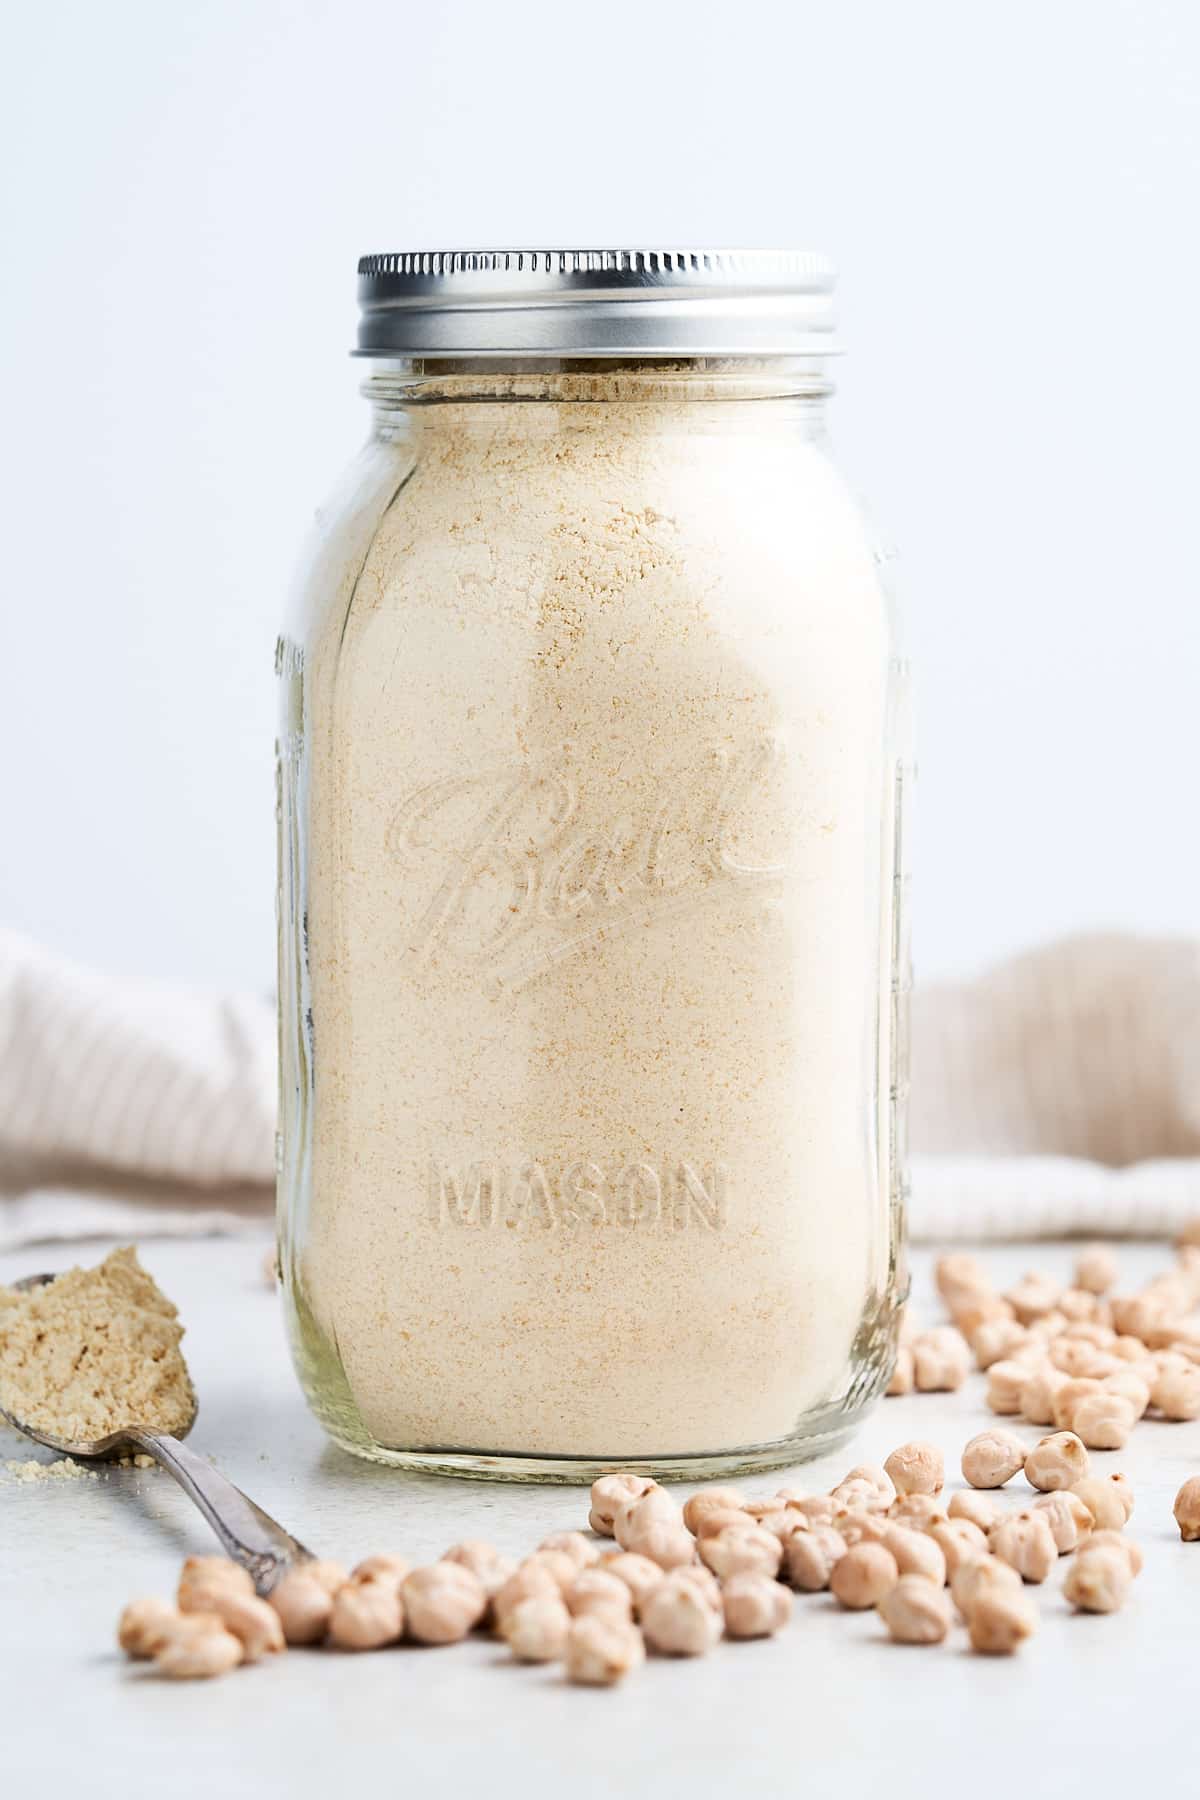 Chickpea flour in a glass mason jar.